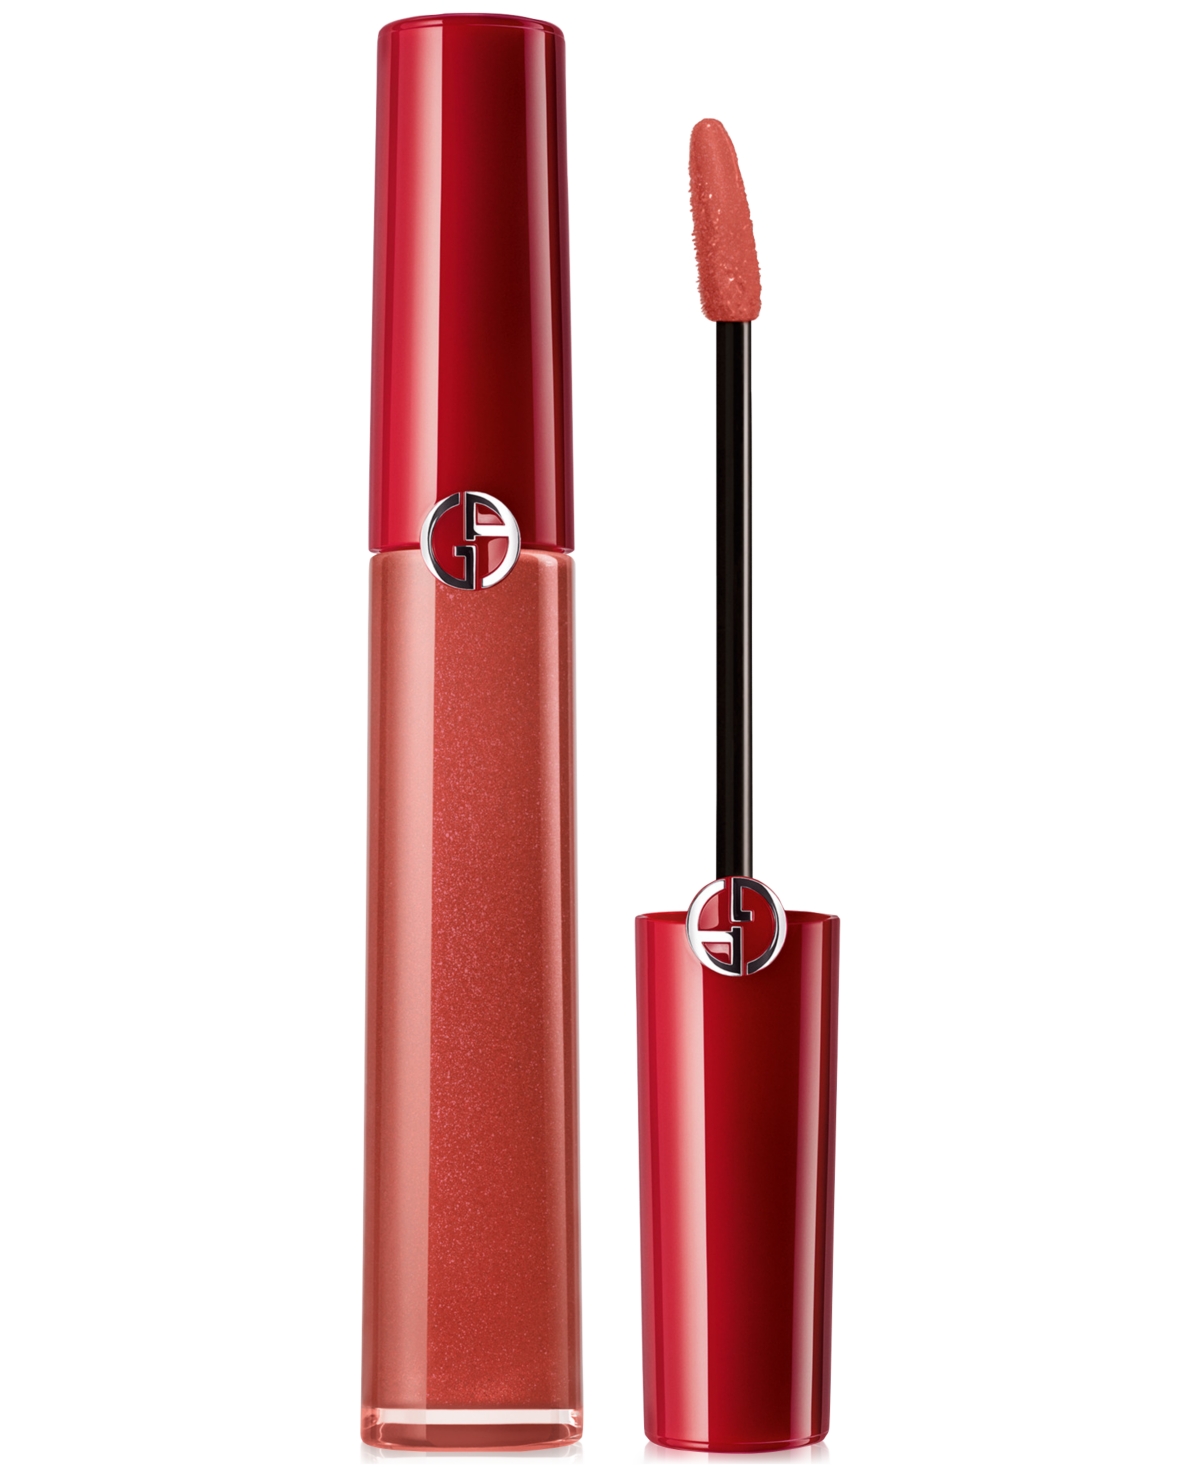 Armani Beauty Lip Maestro Mediterranea Matte Liquid Lipstick - SUN (LUMINOUS ROSE BROWN)